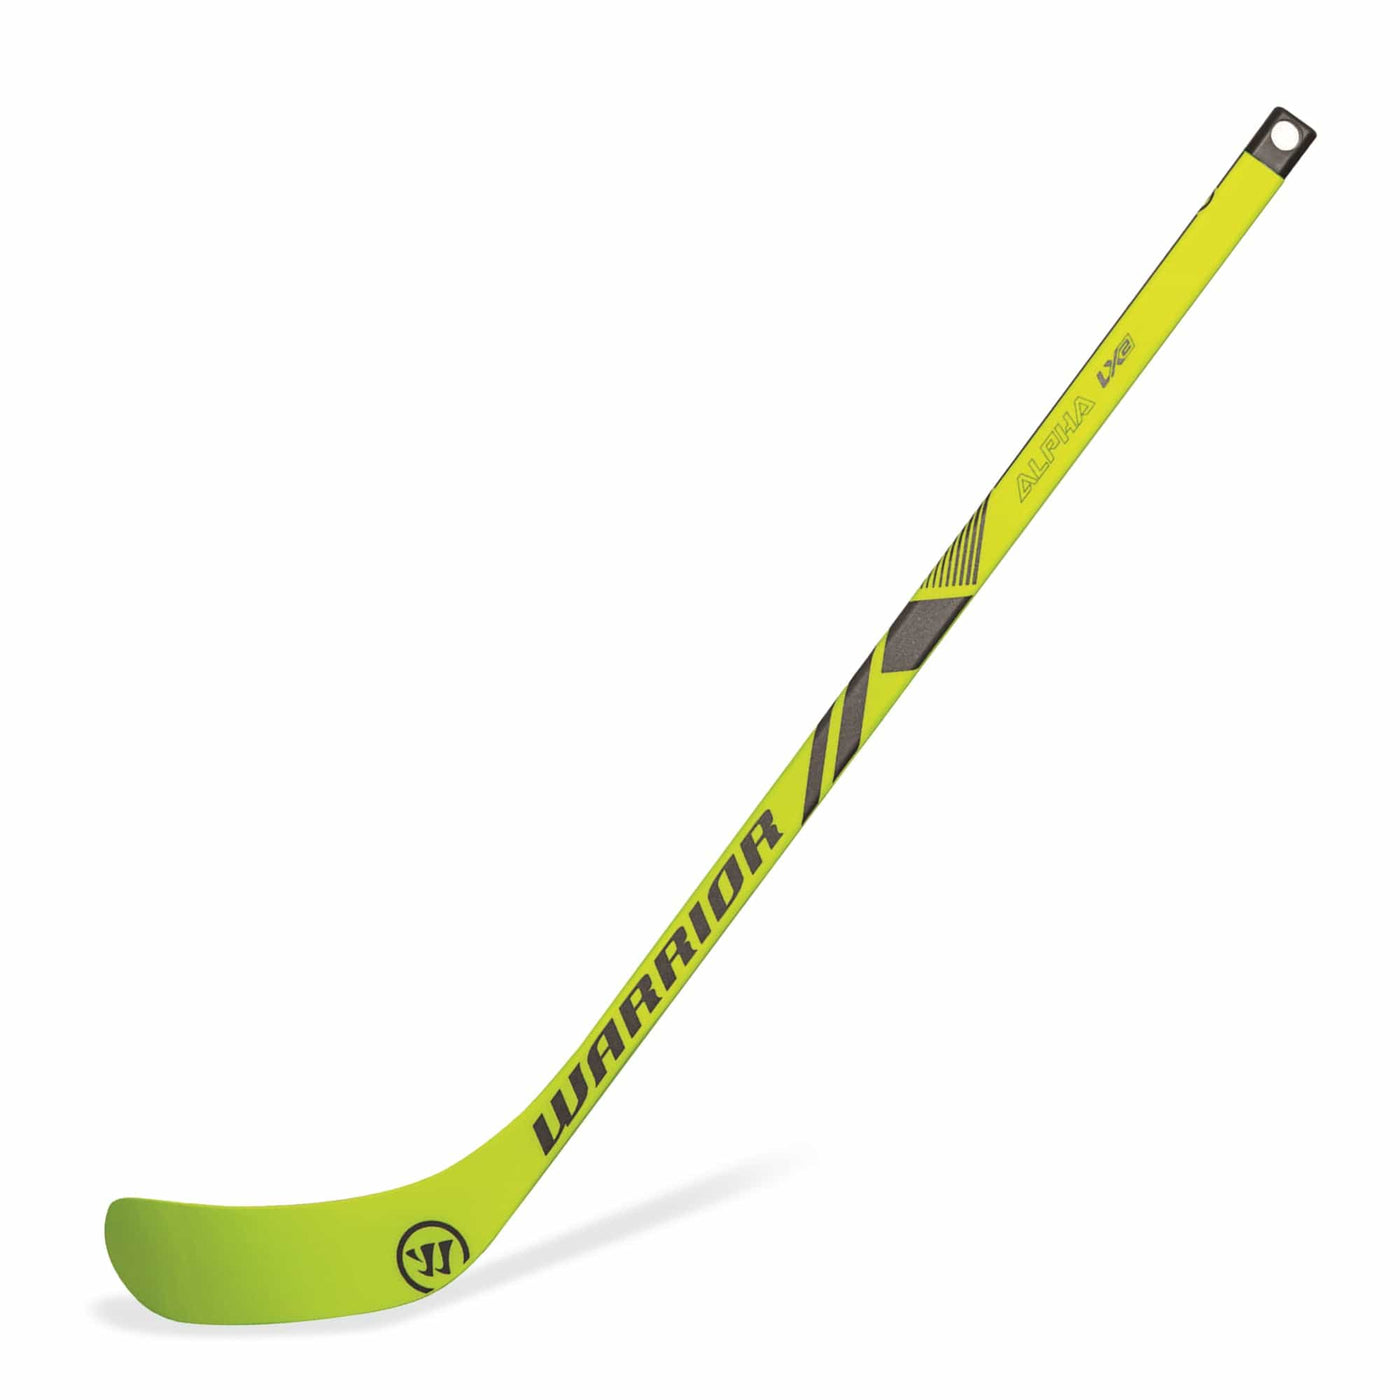 Warrior Alpha LX2 Pro Mini Hockey Stick - Yellow - The Hockey Shop Source For Sports